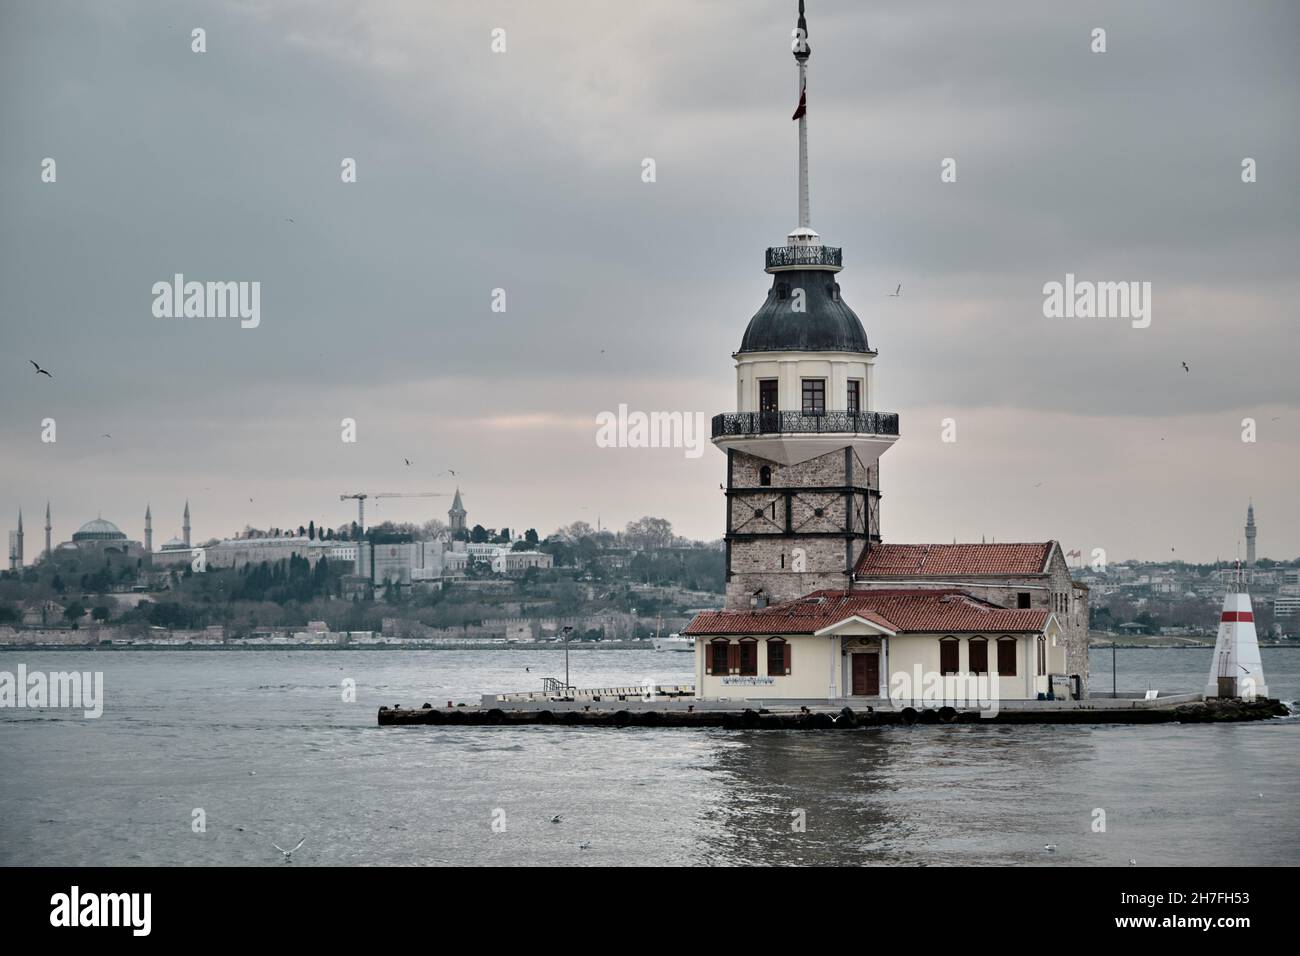 Der Maiden-Turm (kiz kulesi) in istanbul, Stockfoto